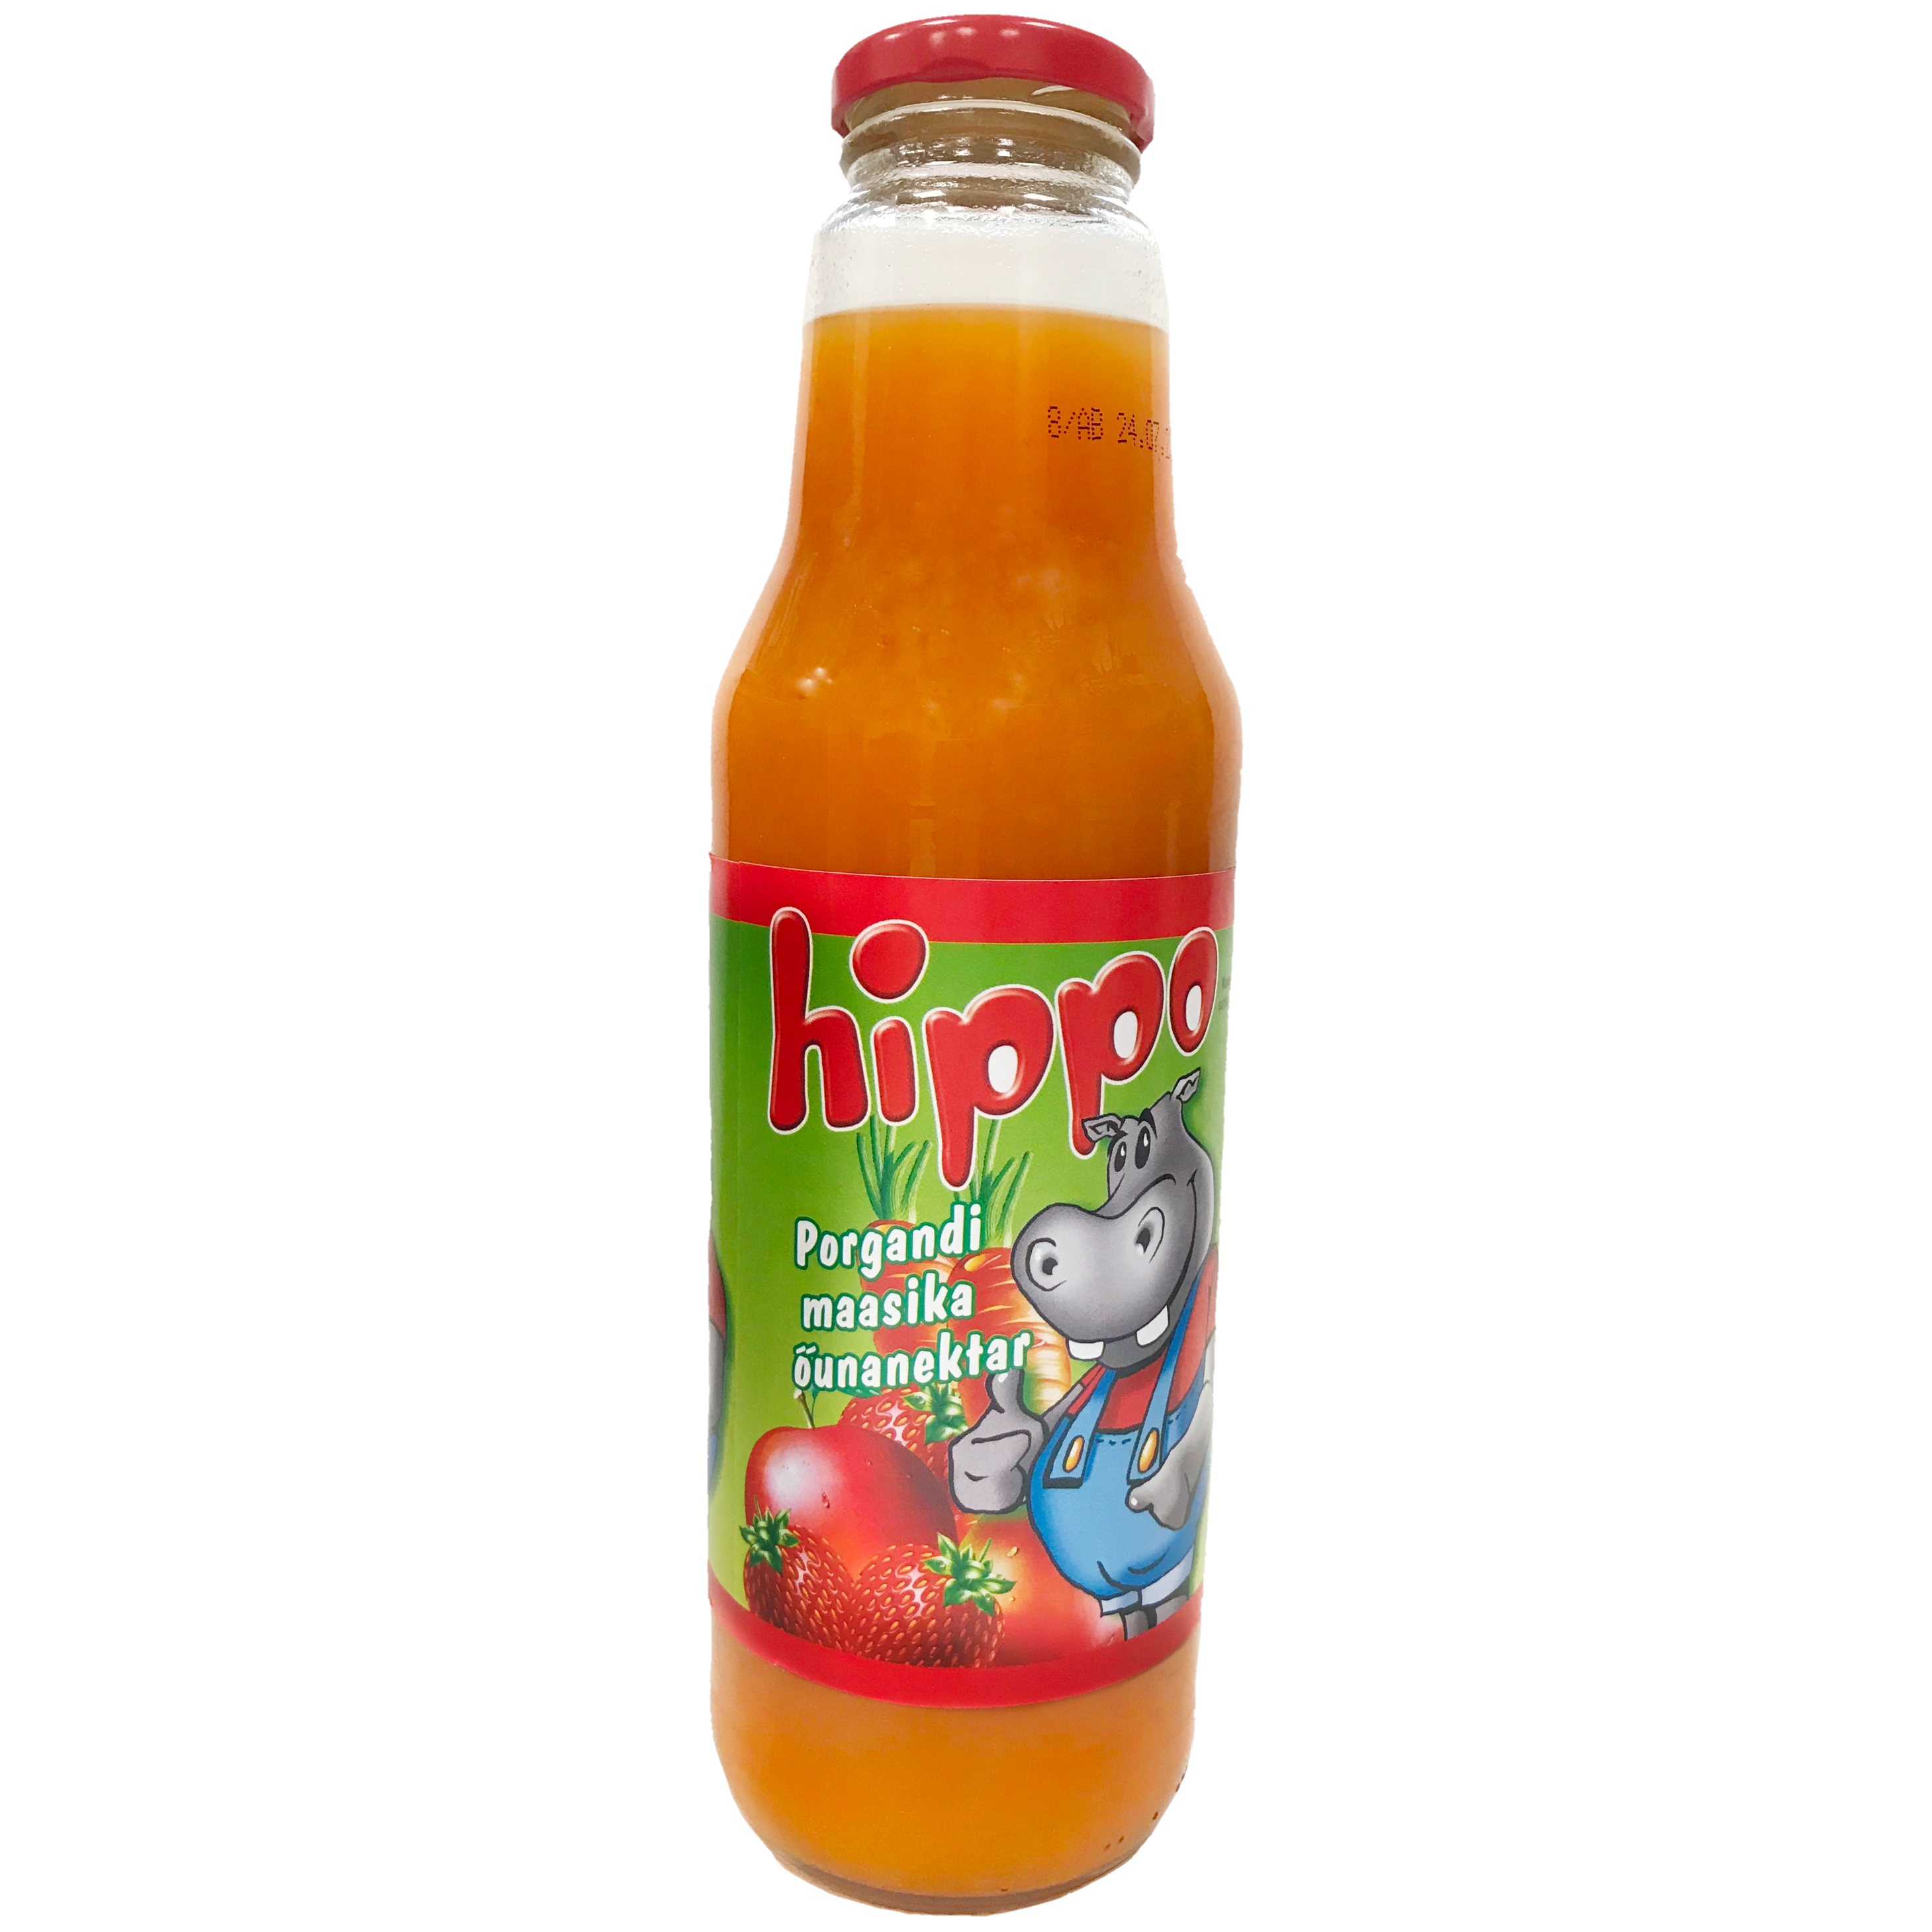 Hippo carrot-strawberry-apple nectar 750ml